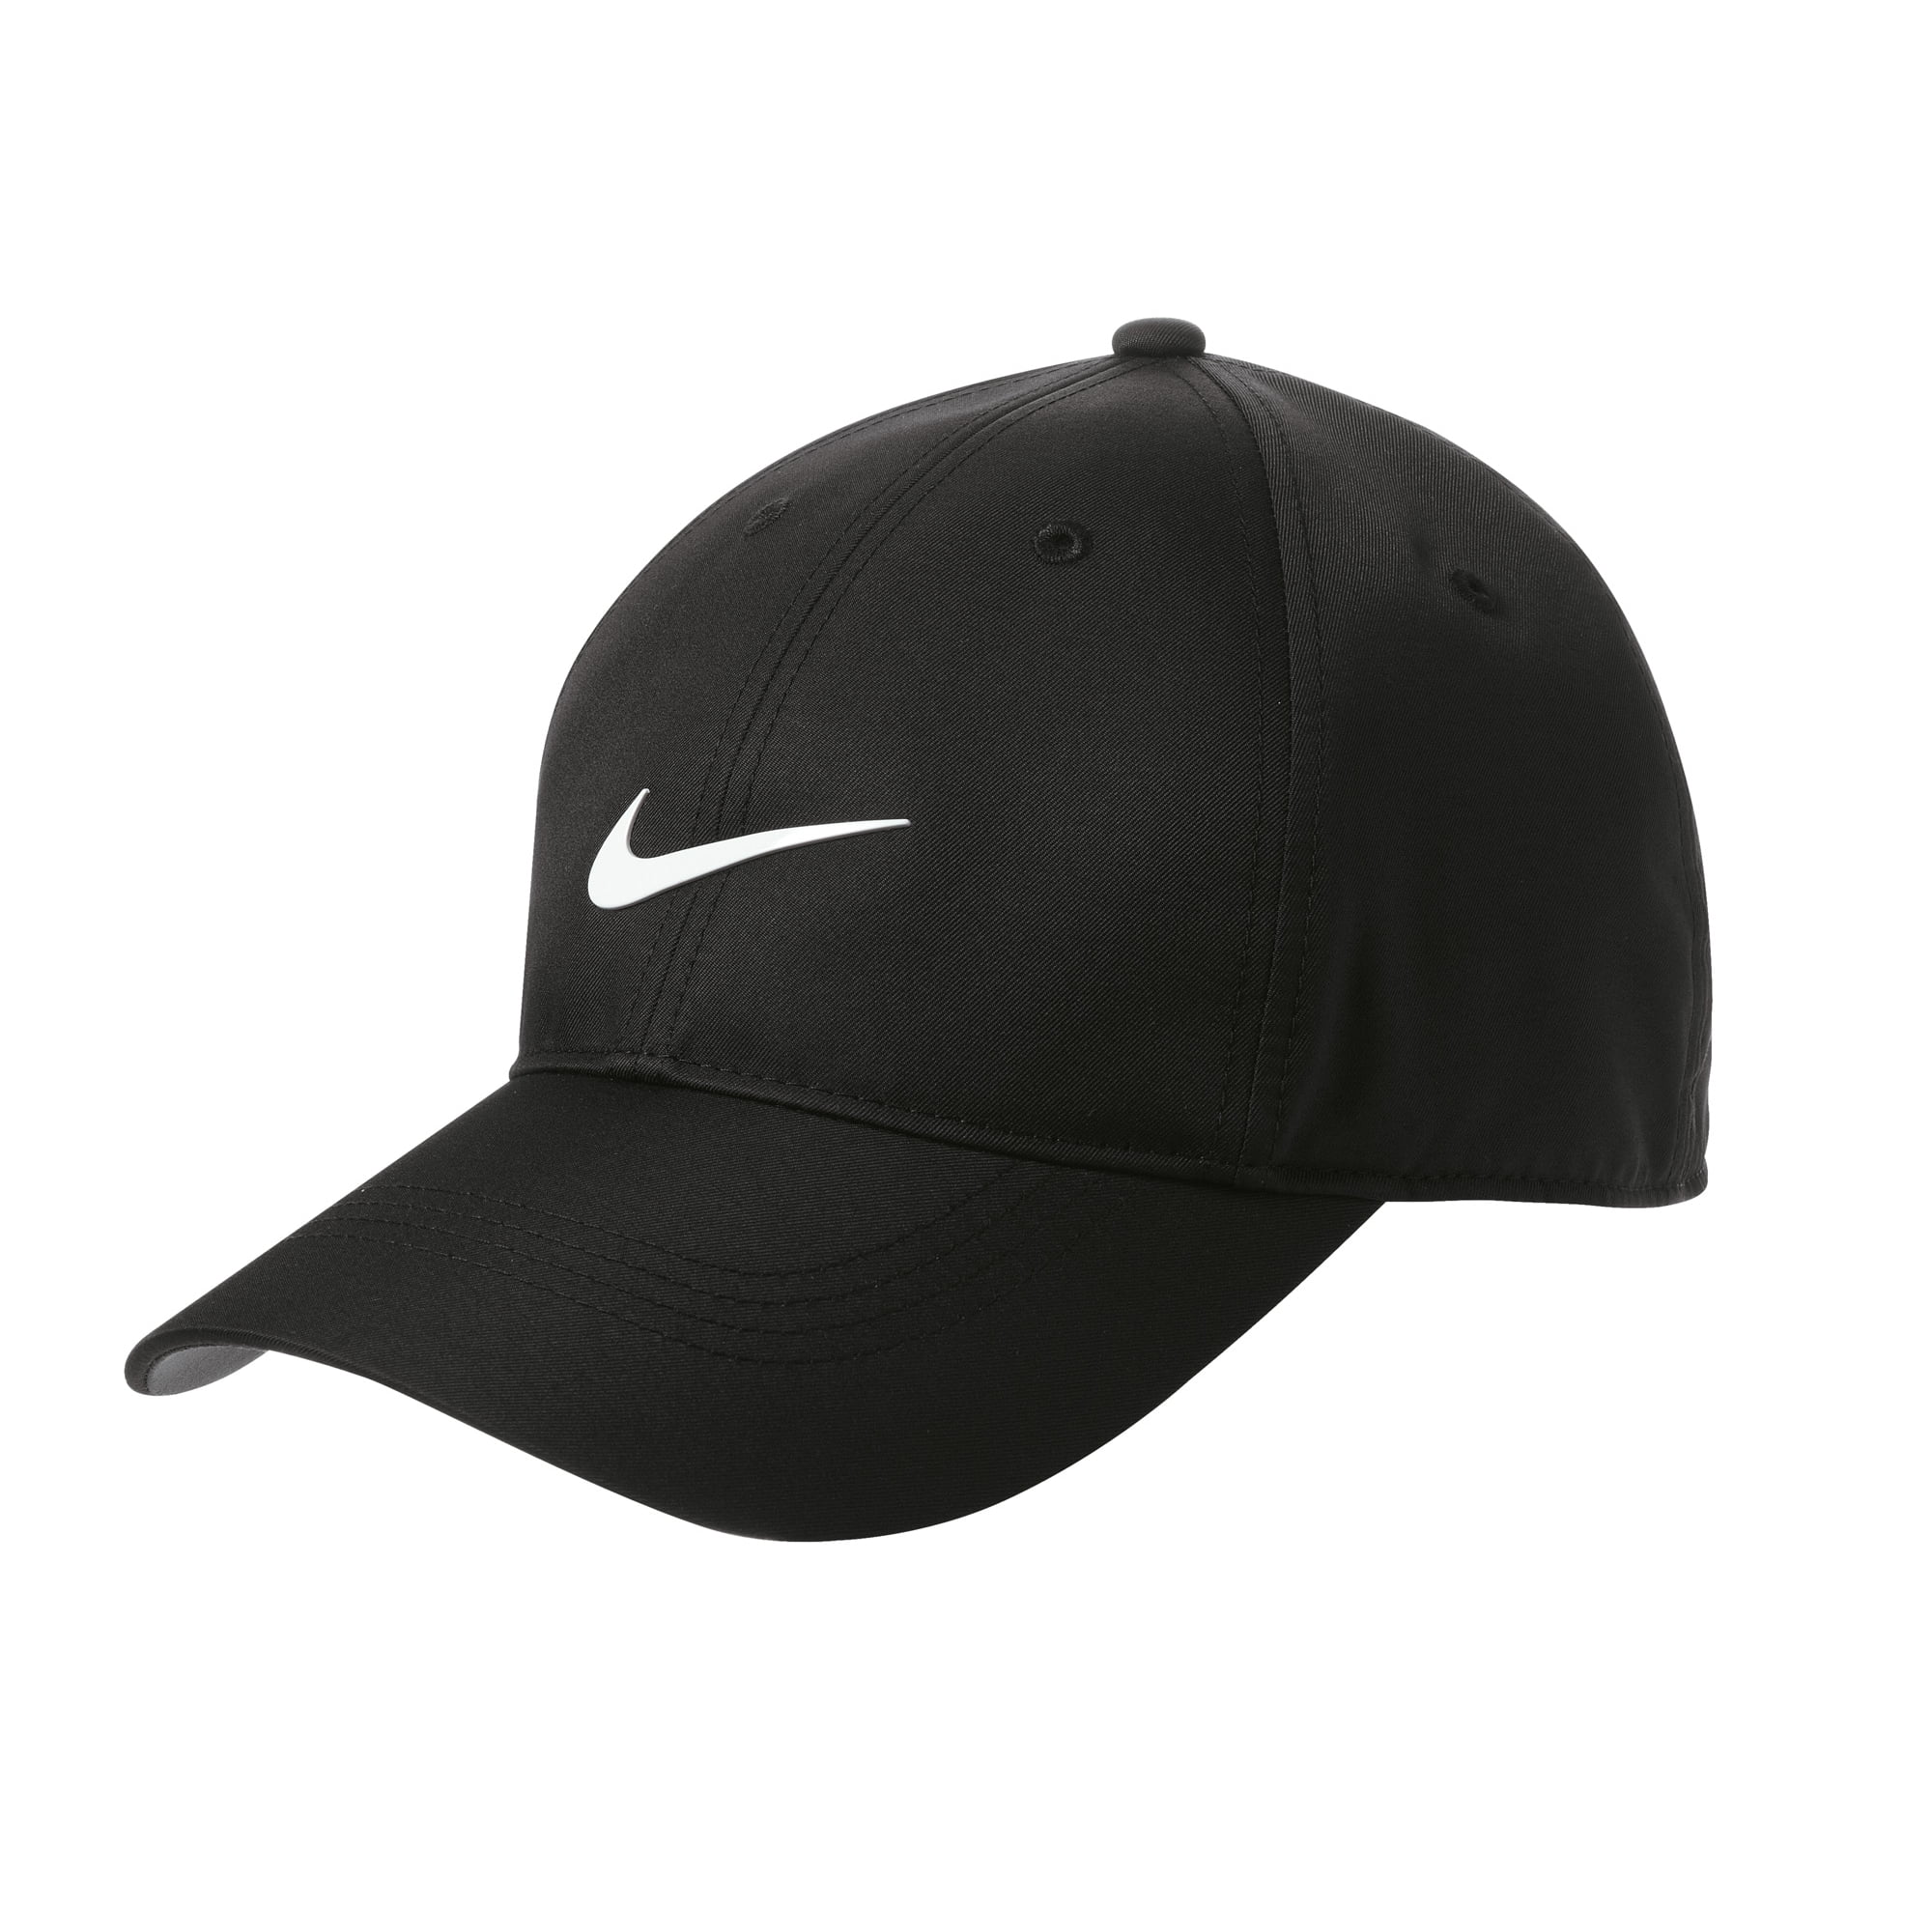 NEW Nike Dri-Fit Unstructured Black/White Hat/Cap - Walmart.com